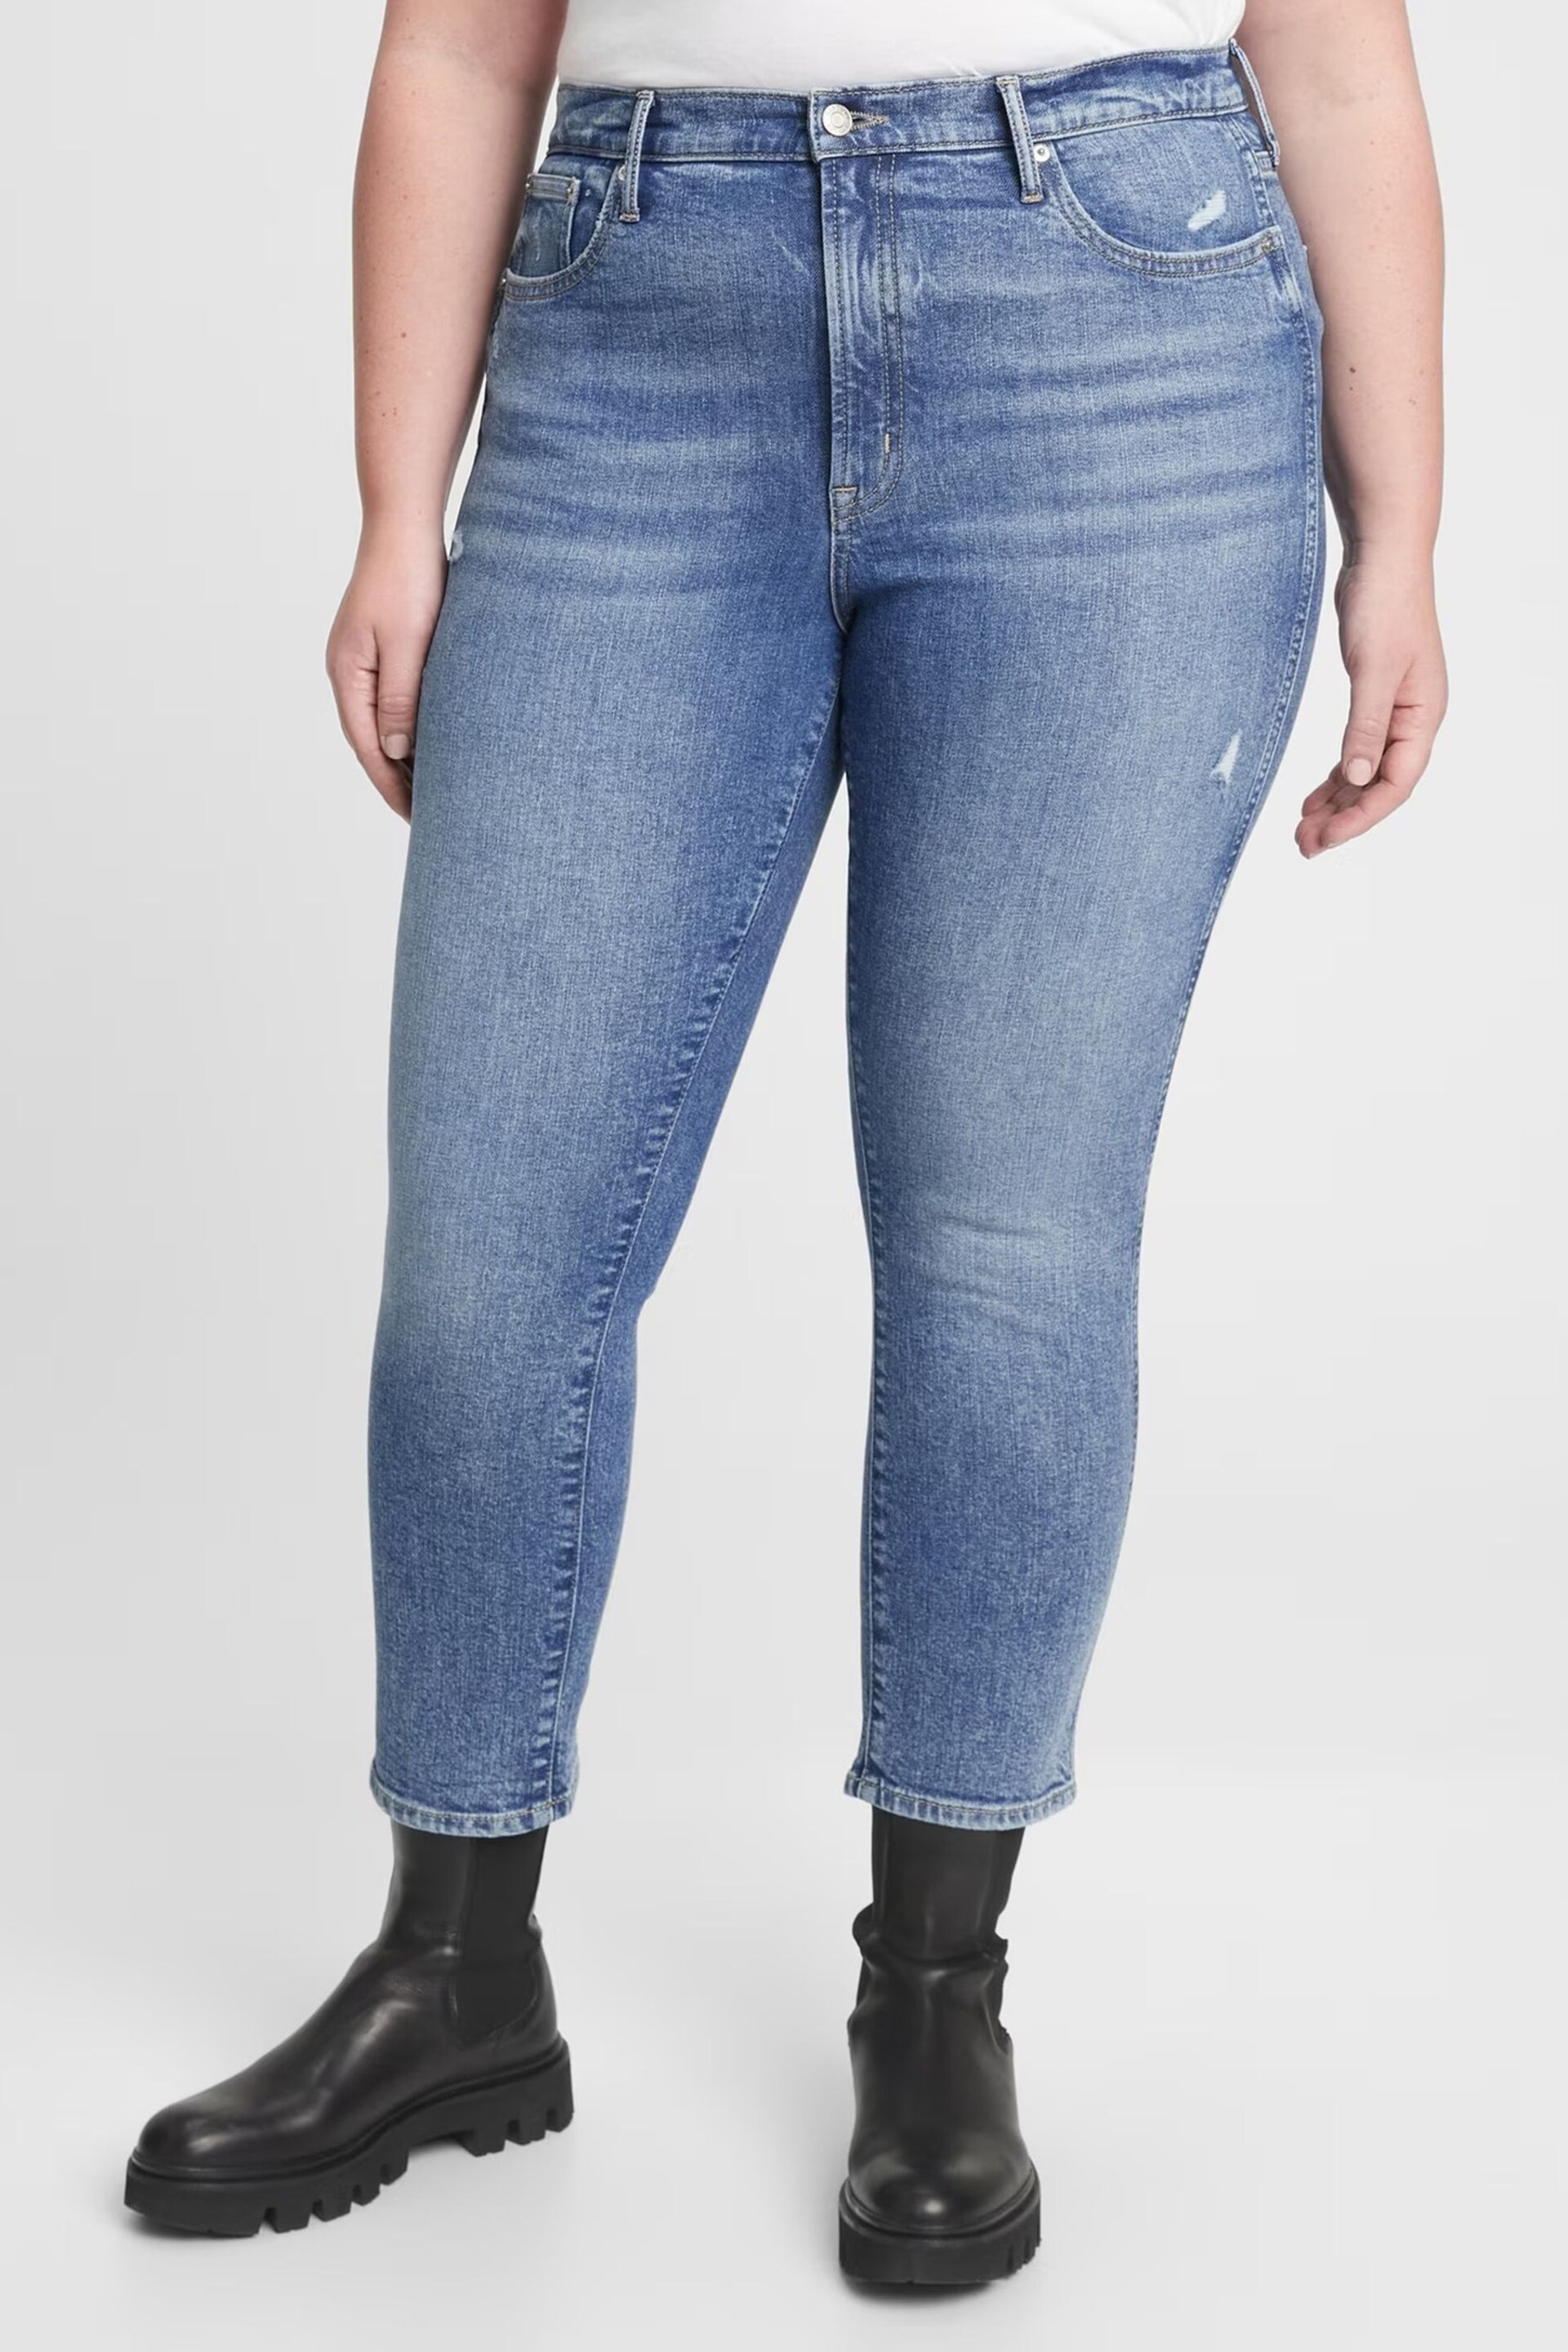 Gap Mid Wash Blue Vintage Slim High Waisted Jeans - Image 5 of 8